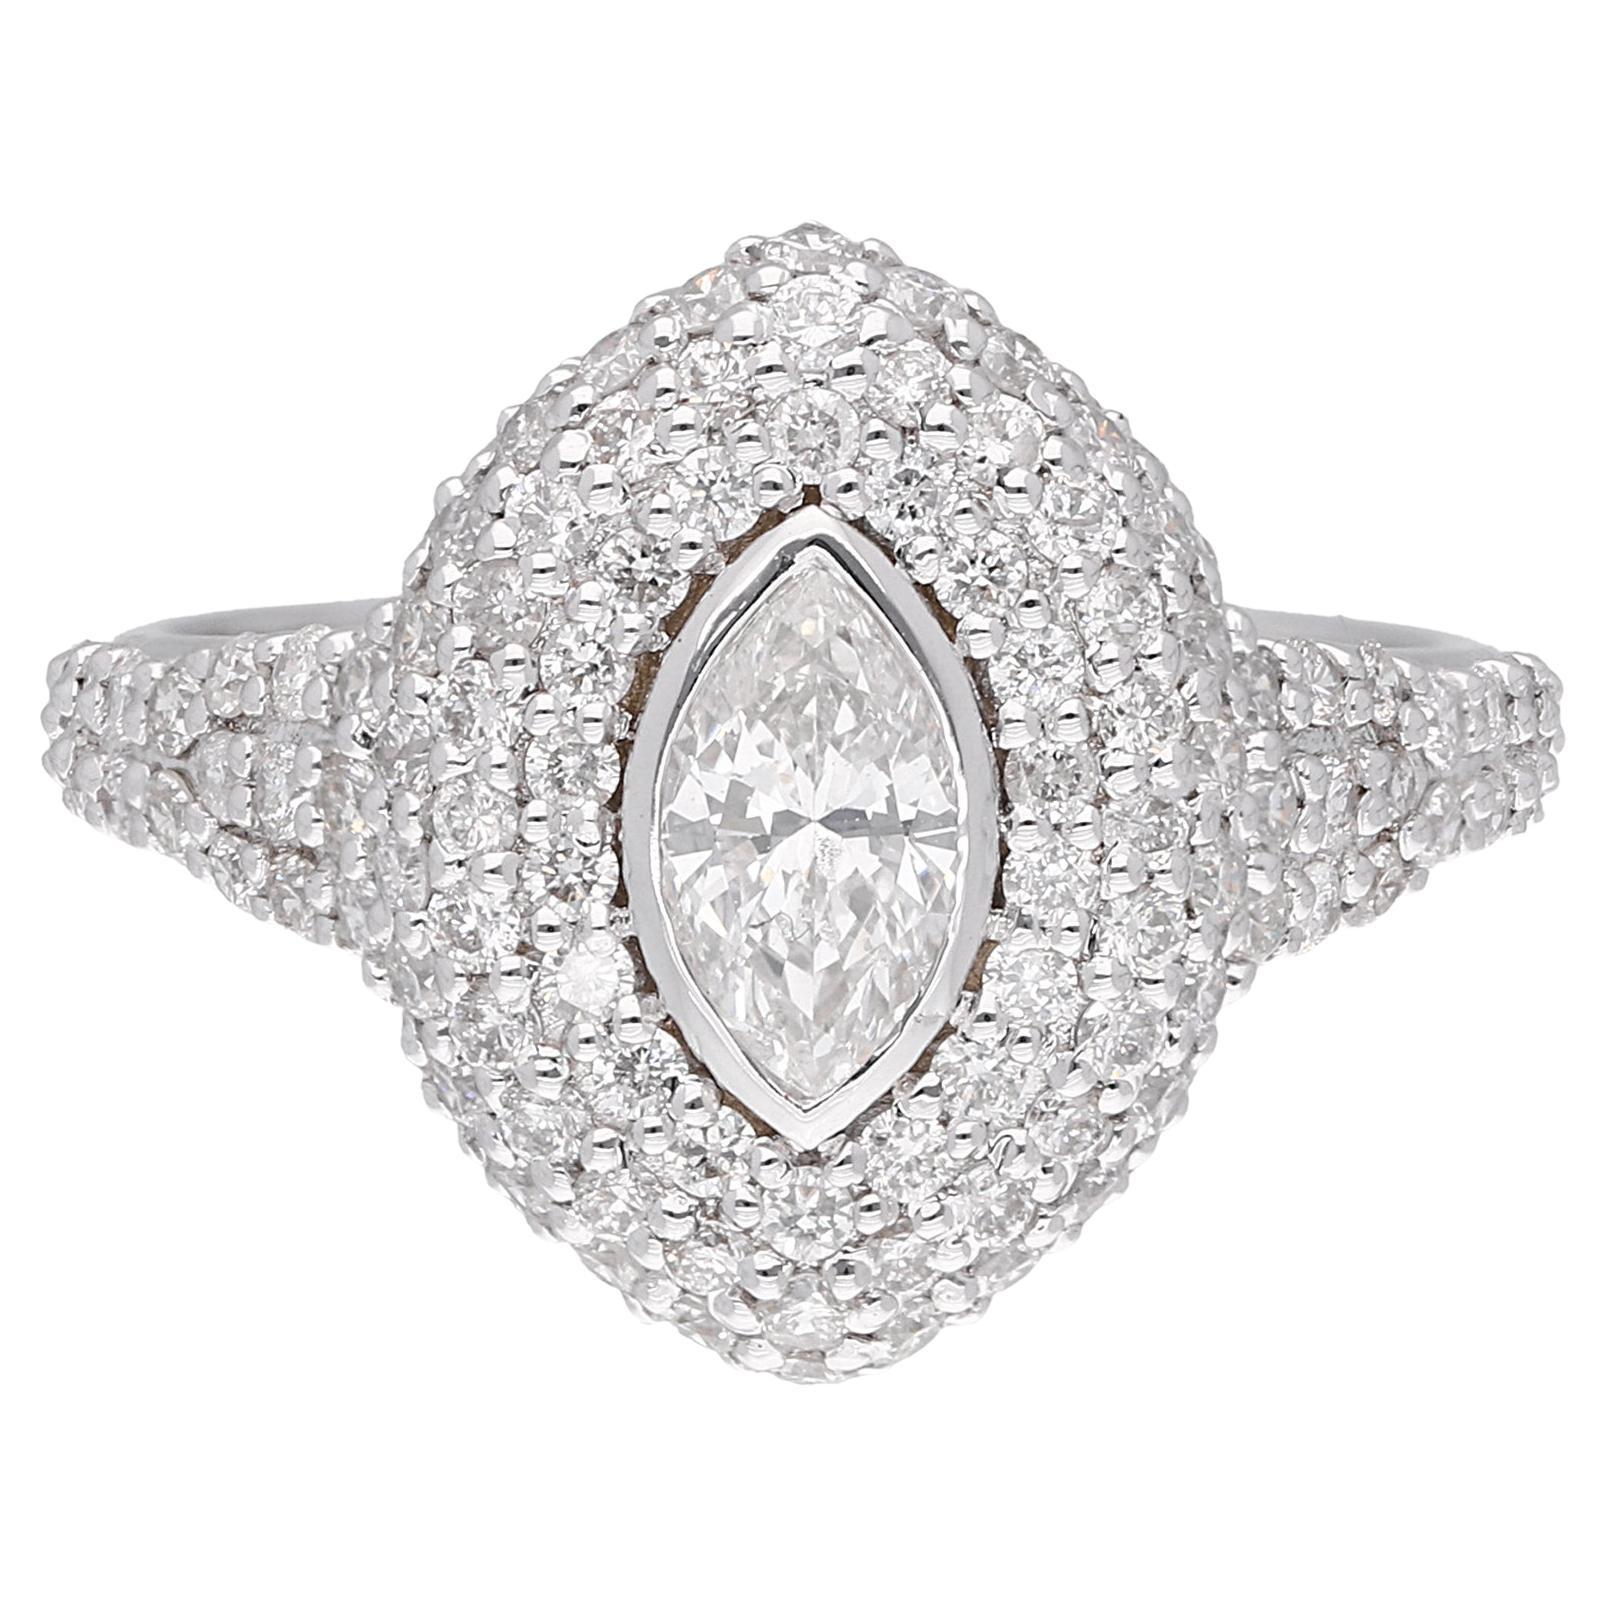 Real 1.61 Carat Marquise Diamond Dome Ring 14 Karat White Gold Handmade Jewelry